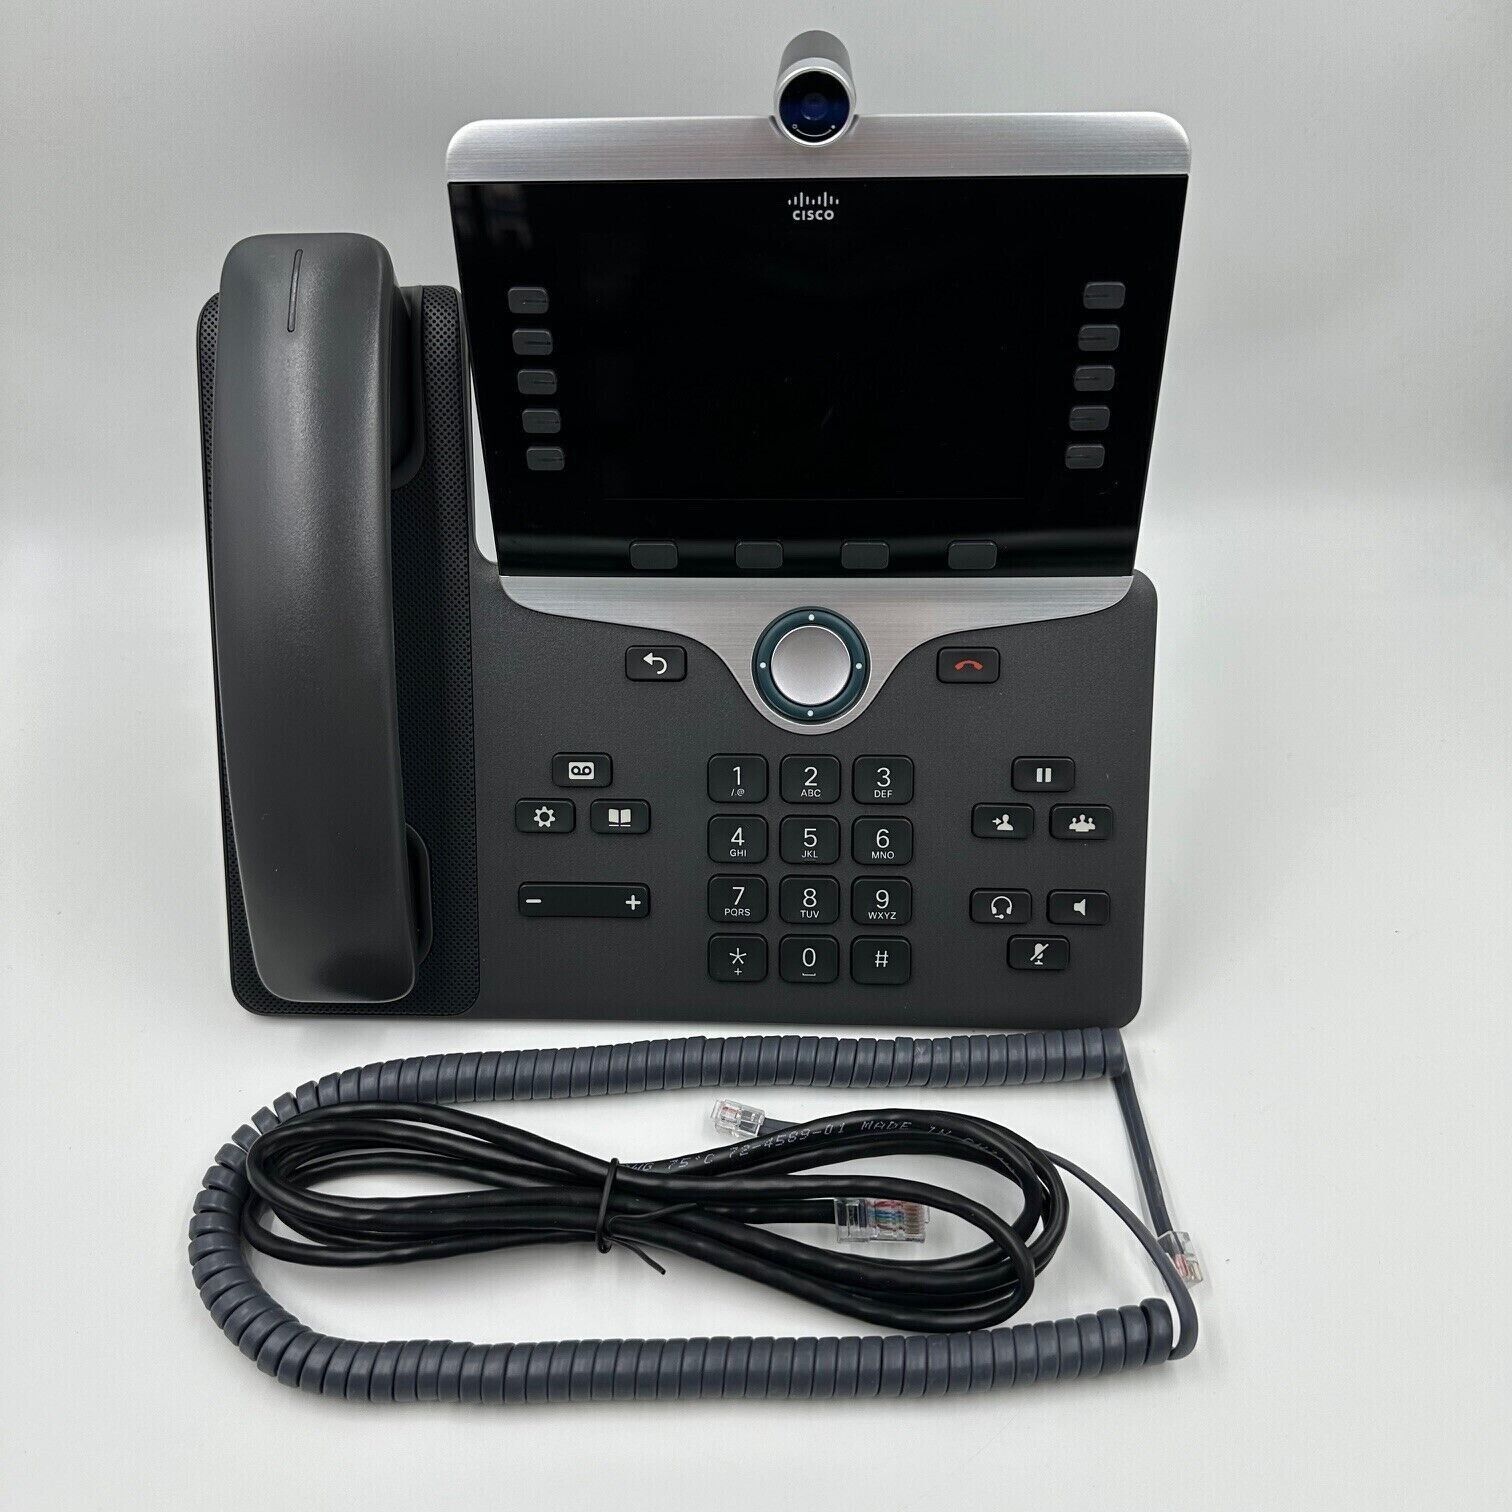 Cisco CP-8845-K9 5 Line IP Video Phone - Charcoal